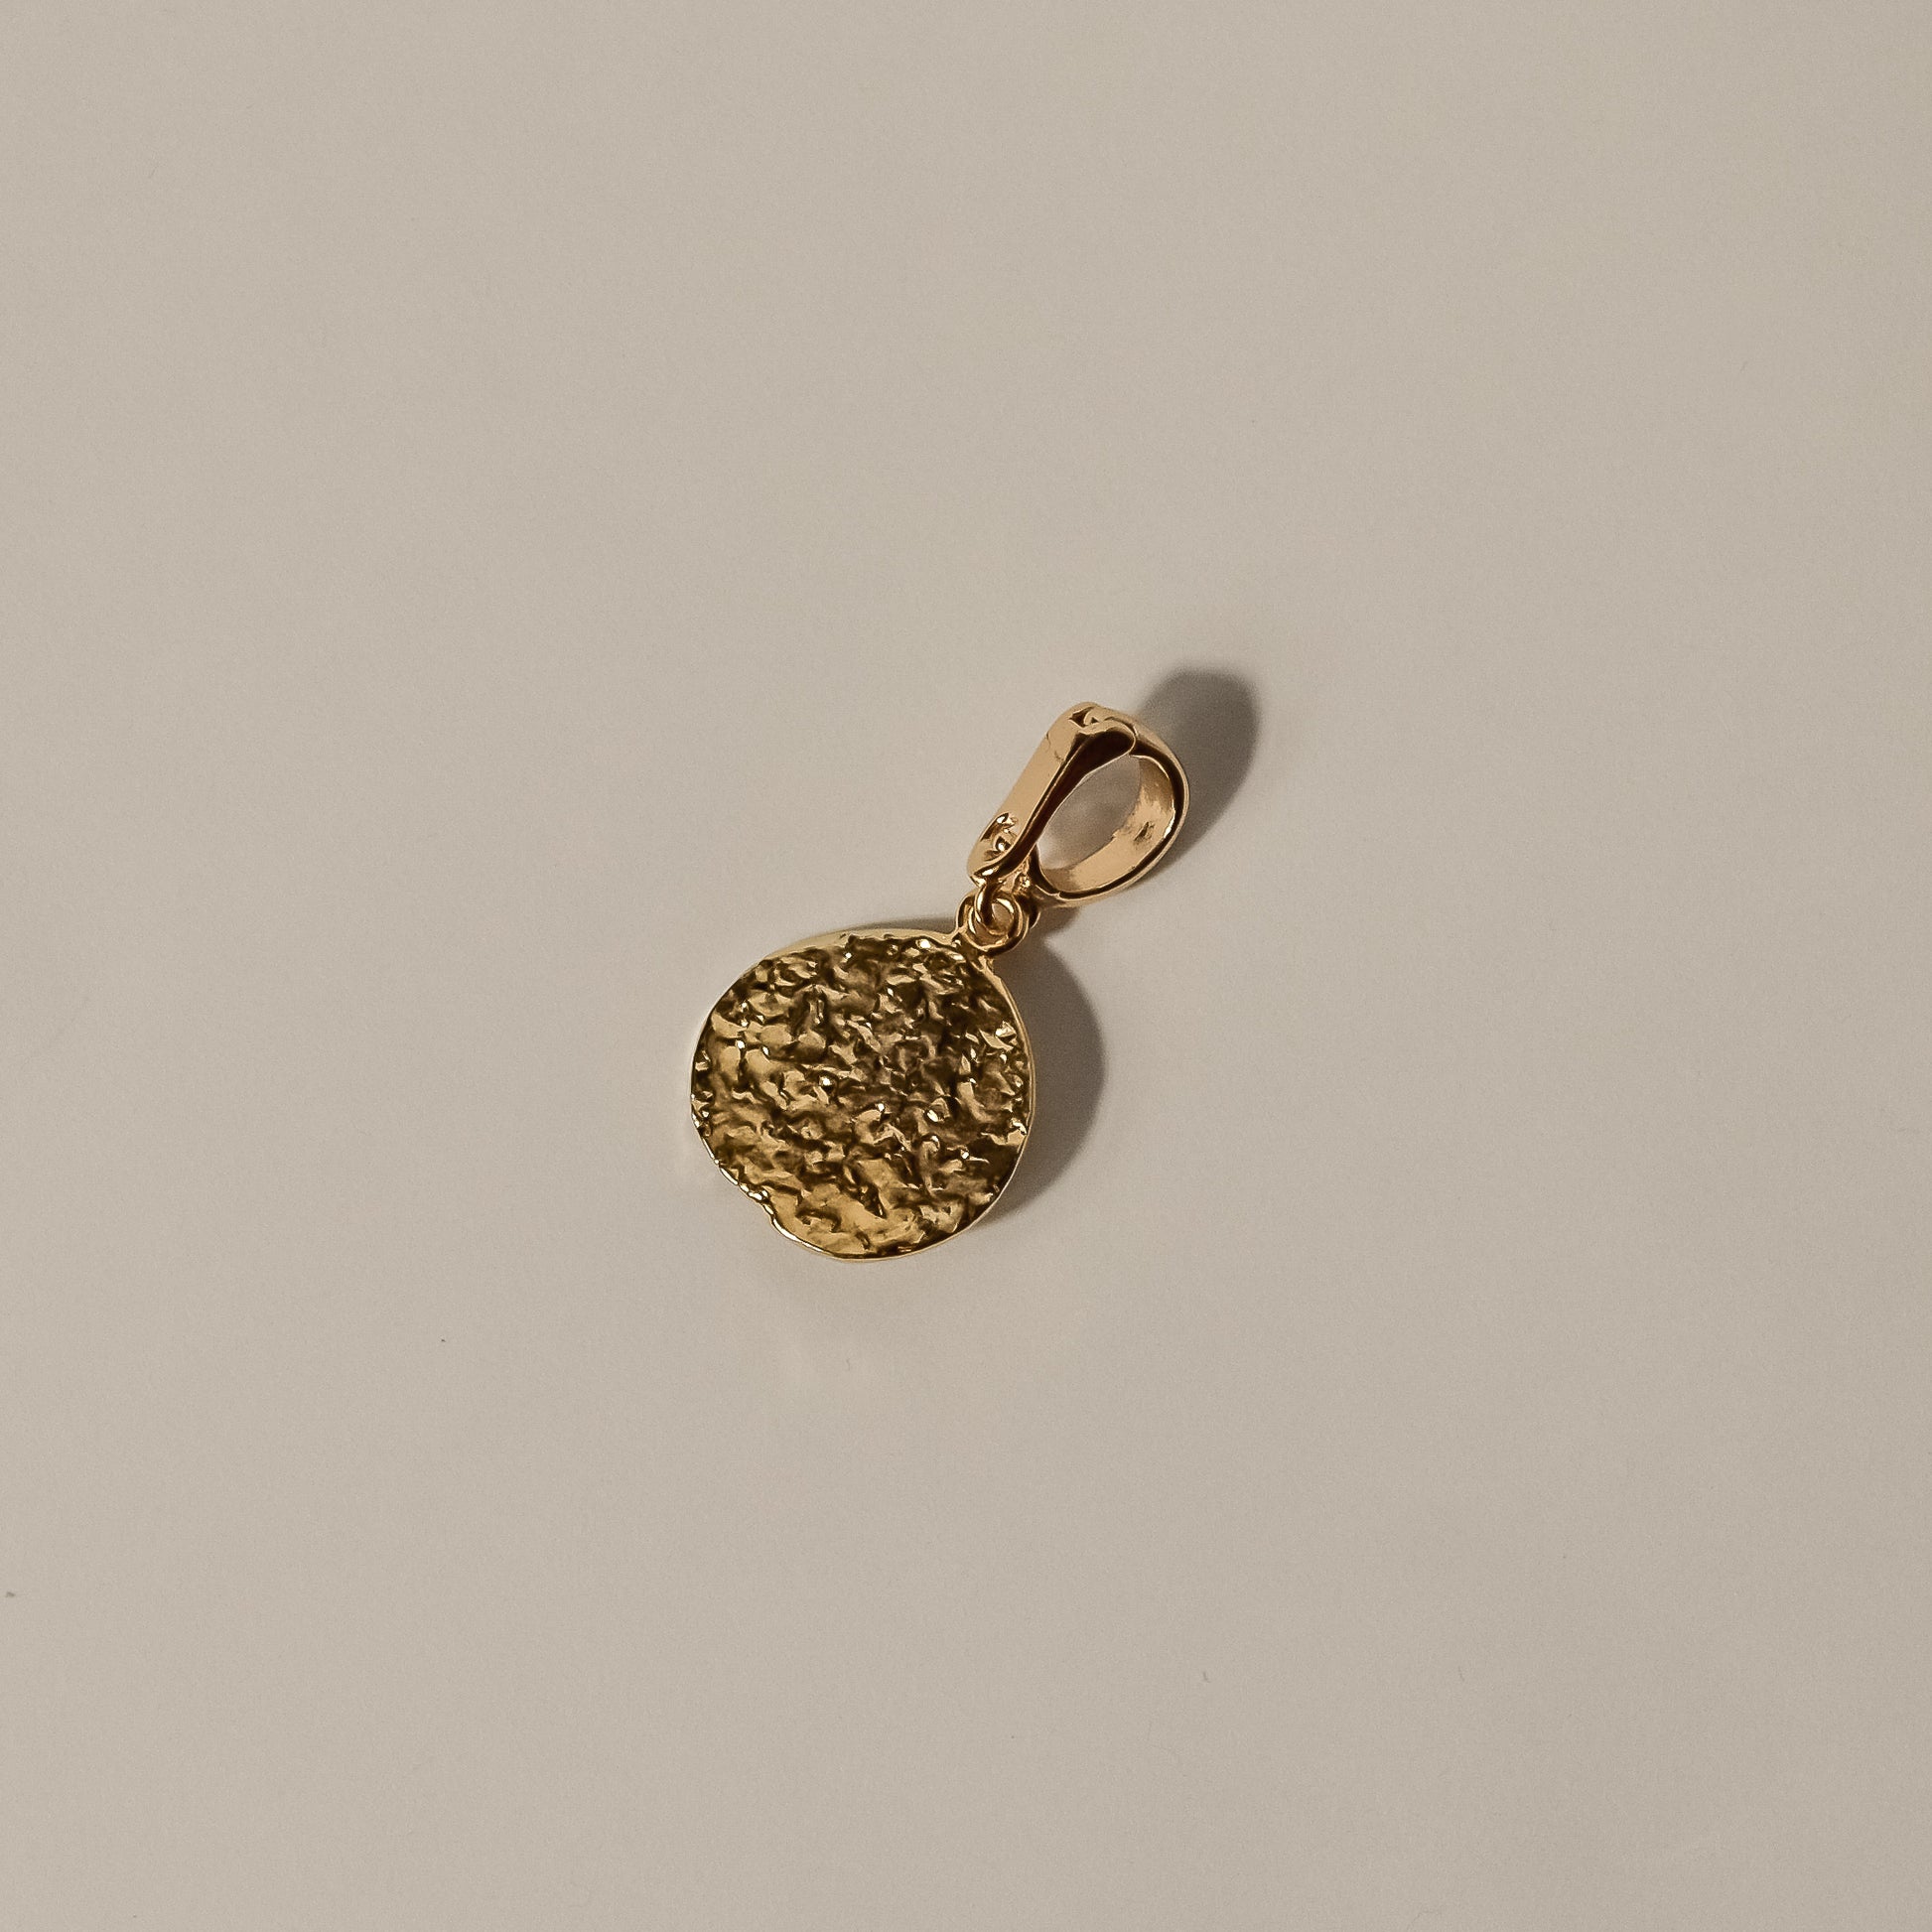 Memento  pendant, round textured gold  charm, soldered bracelet